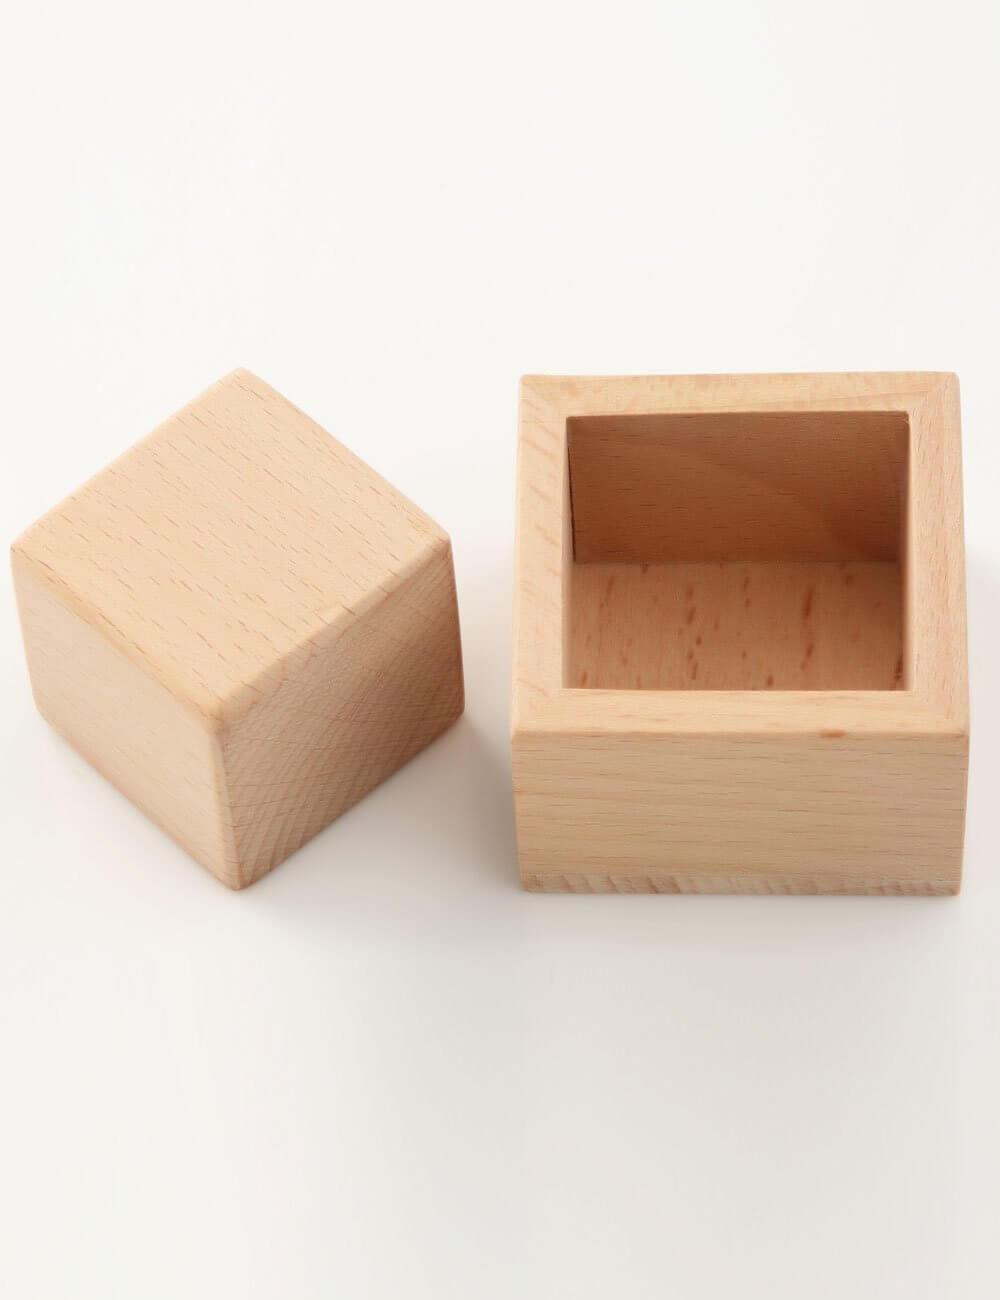 Box and a Cube - Ariro Toys